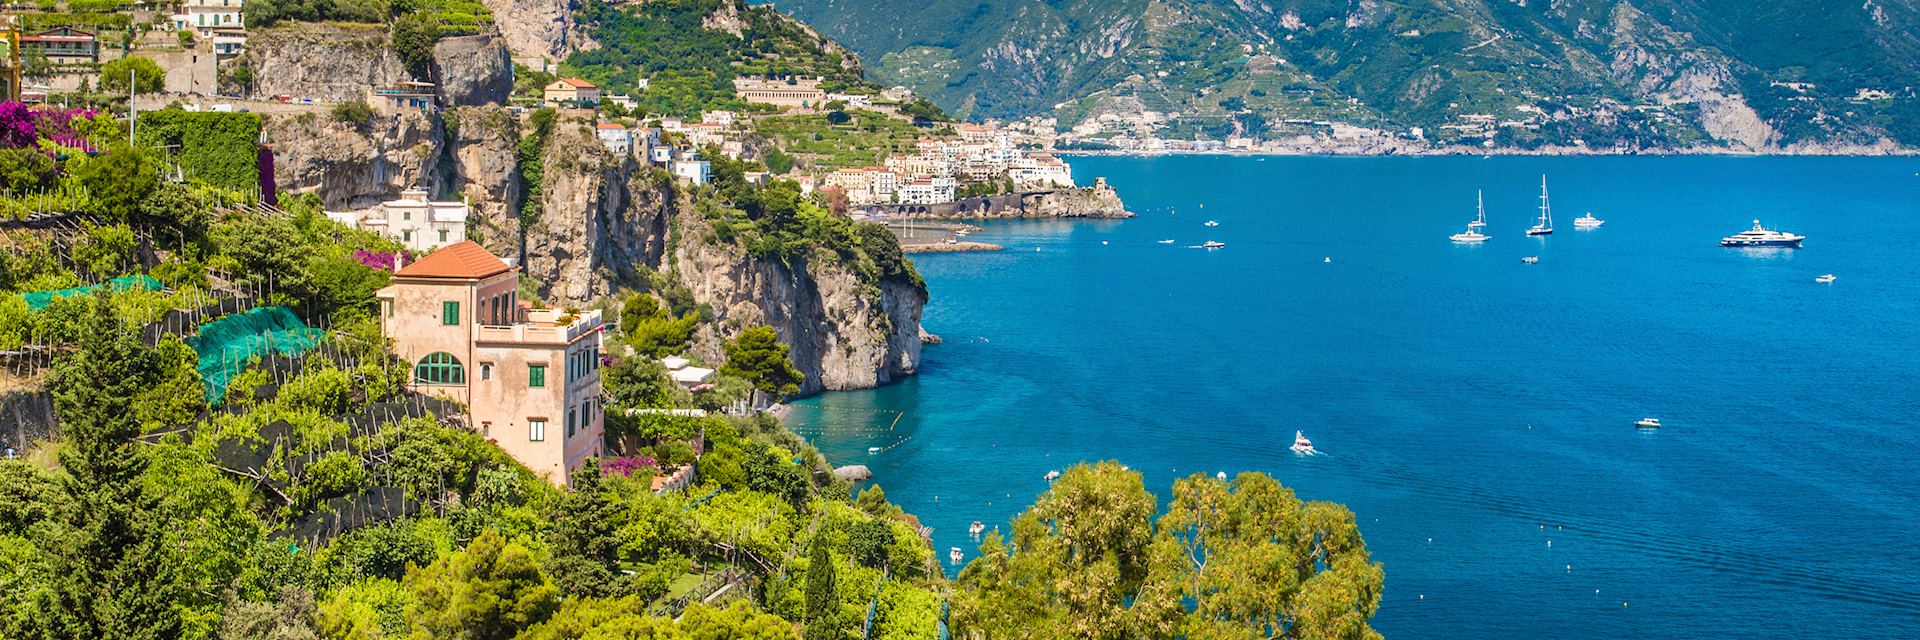 Capri on the Amalfi Coast, Italy